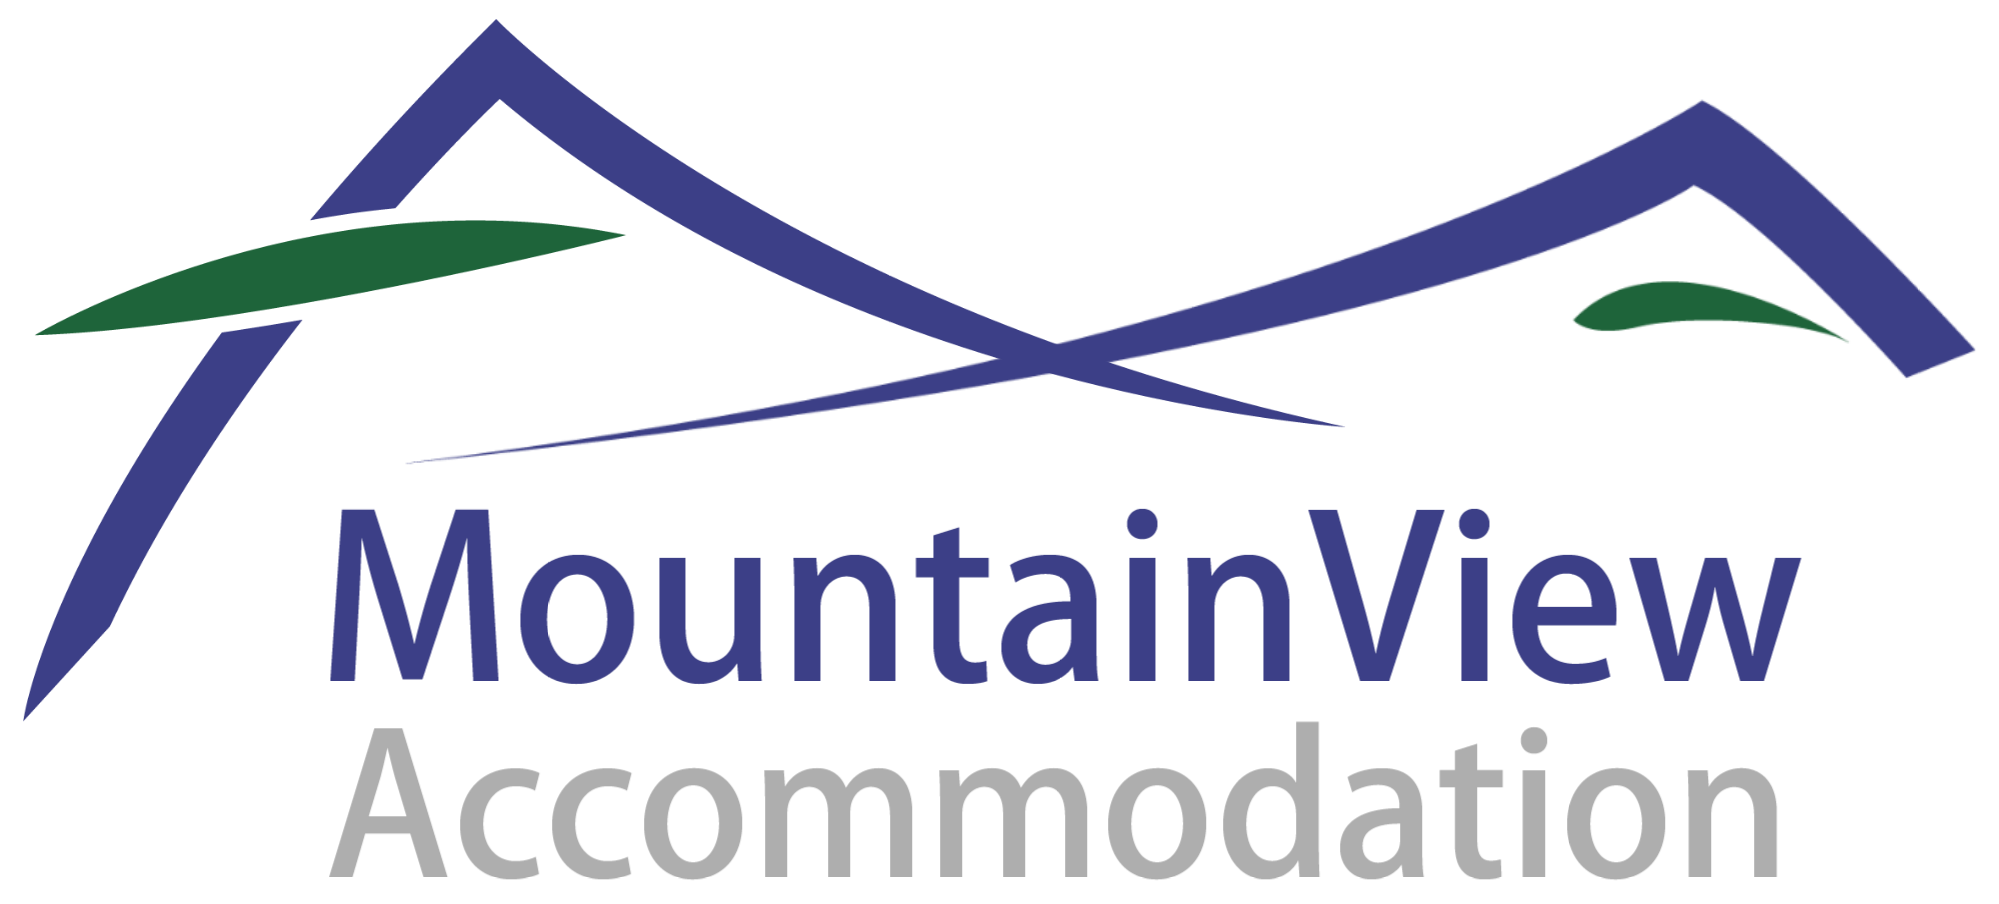 MountainView Accommodation Logo